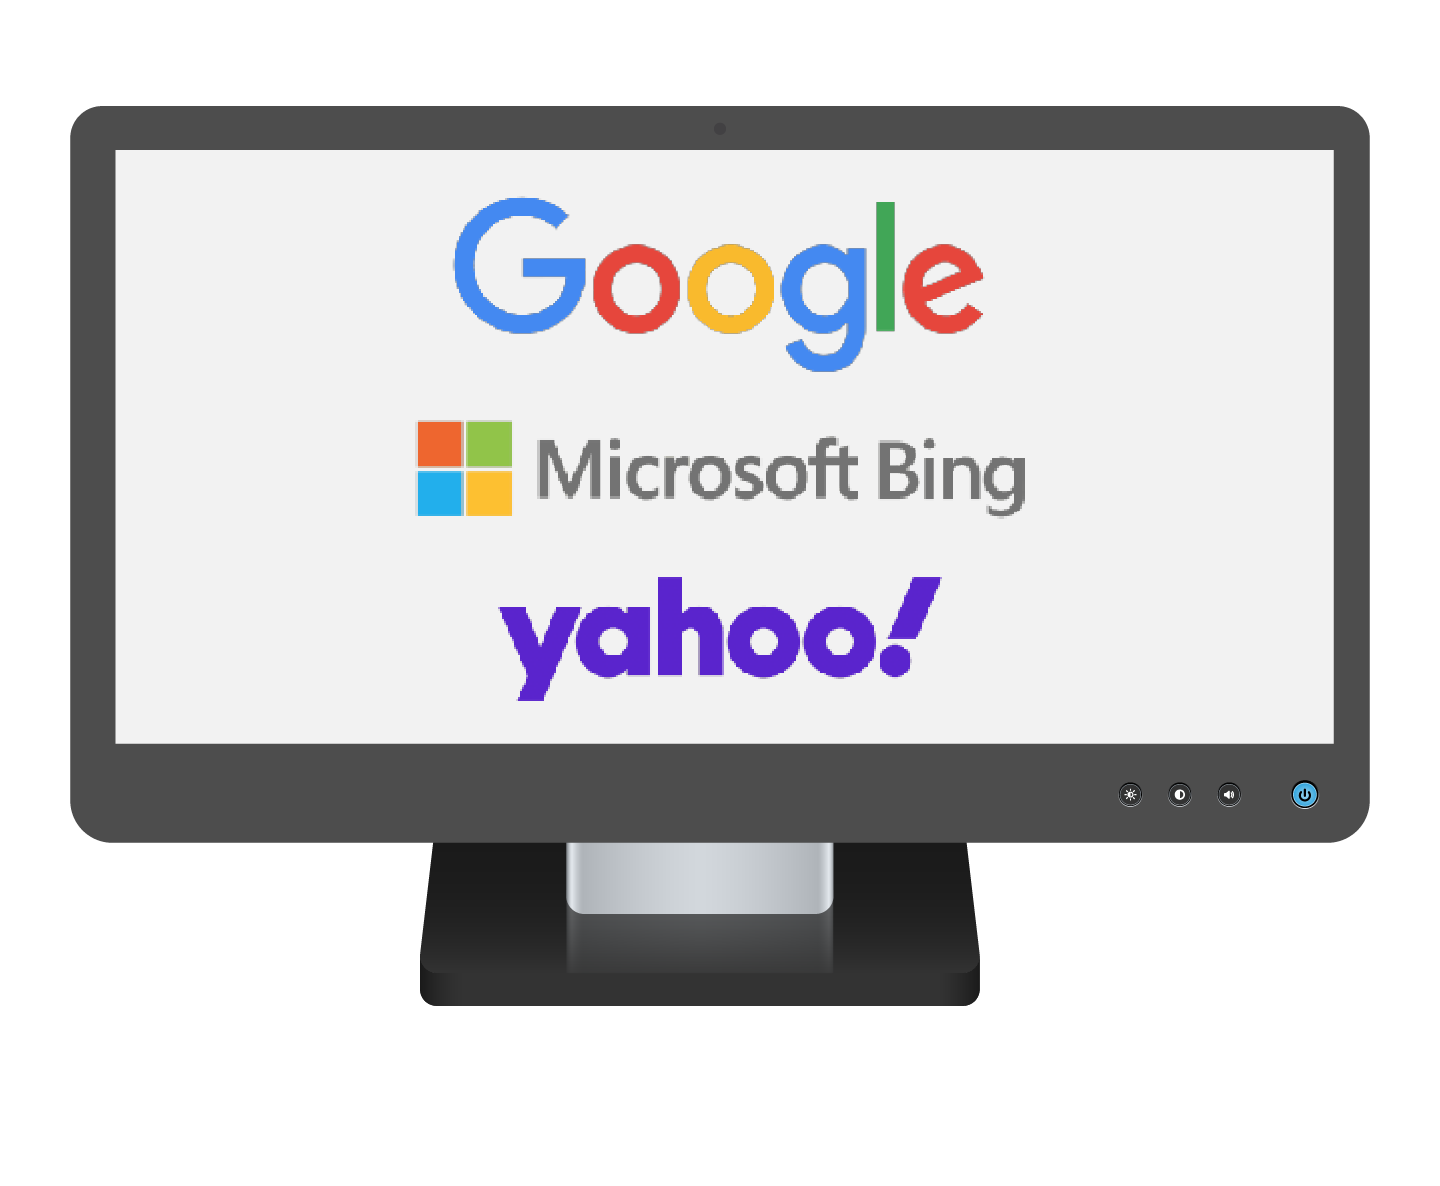 A desktop computer displaying the logos for Google, Microsoft Bing and Yahoo!